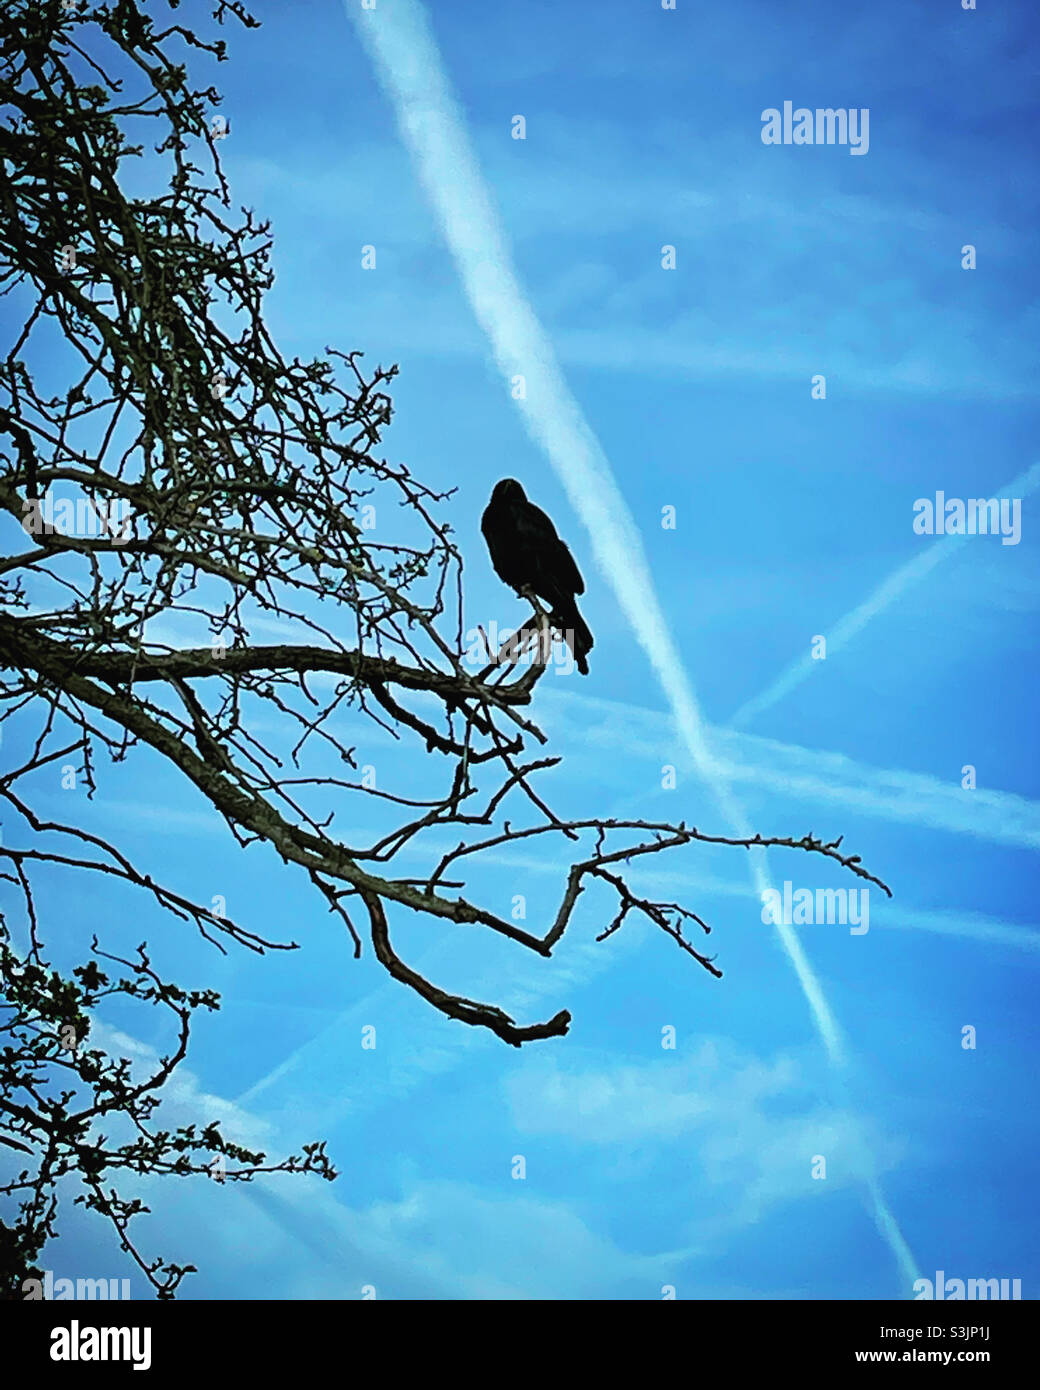 Krähe im Weißdornbaum mit dem kontrainirten Himmel Stockfoto